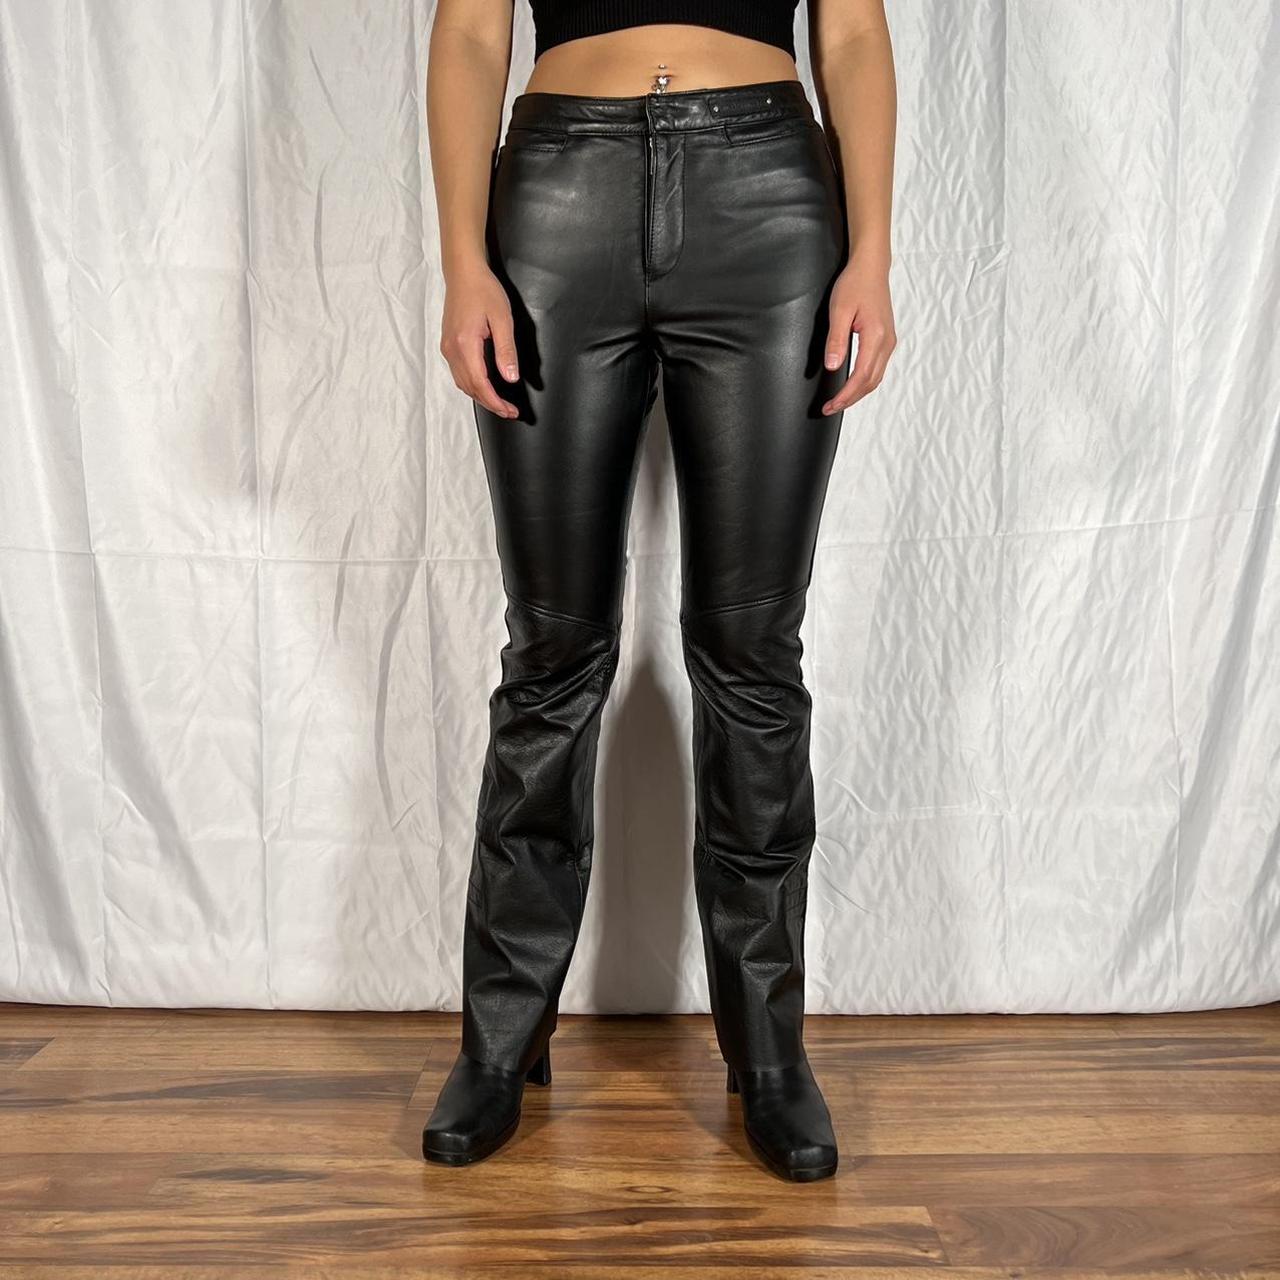 Genuine Harley Davidson Black Studded Leather Pants womens sz 10 Biker